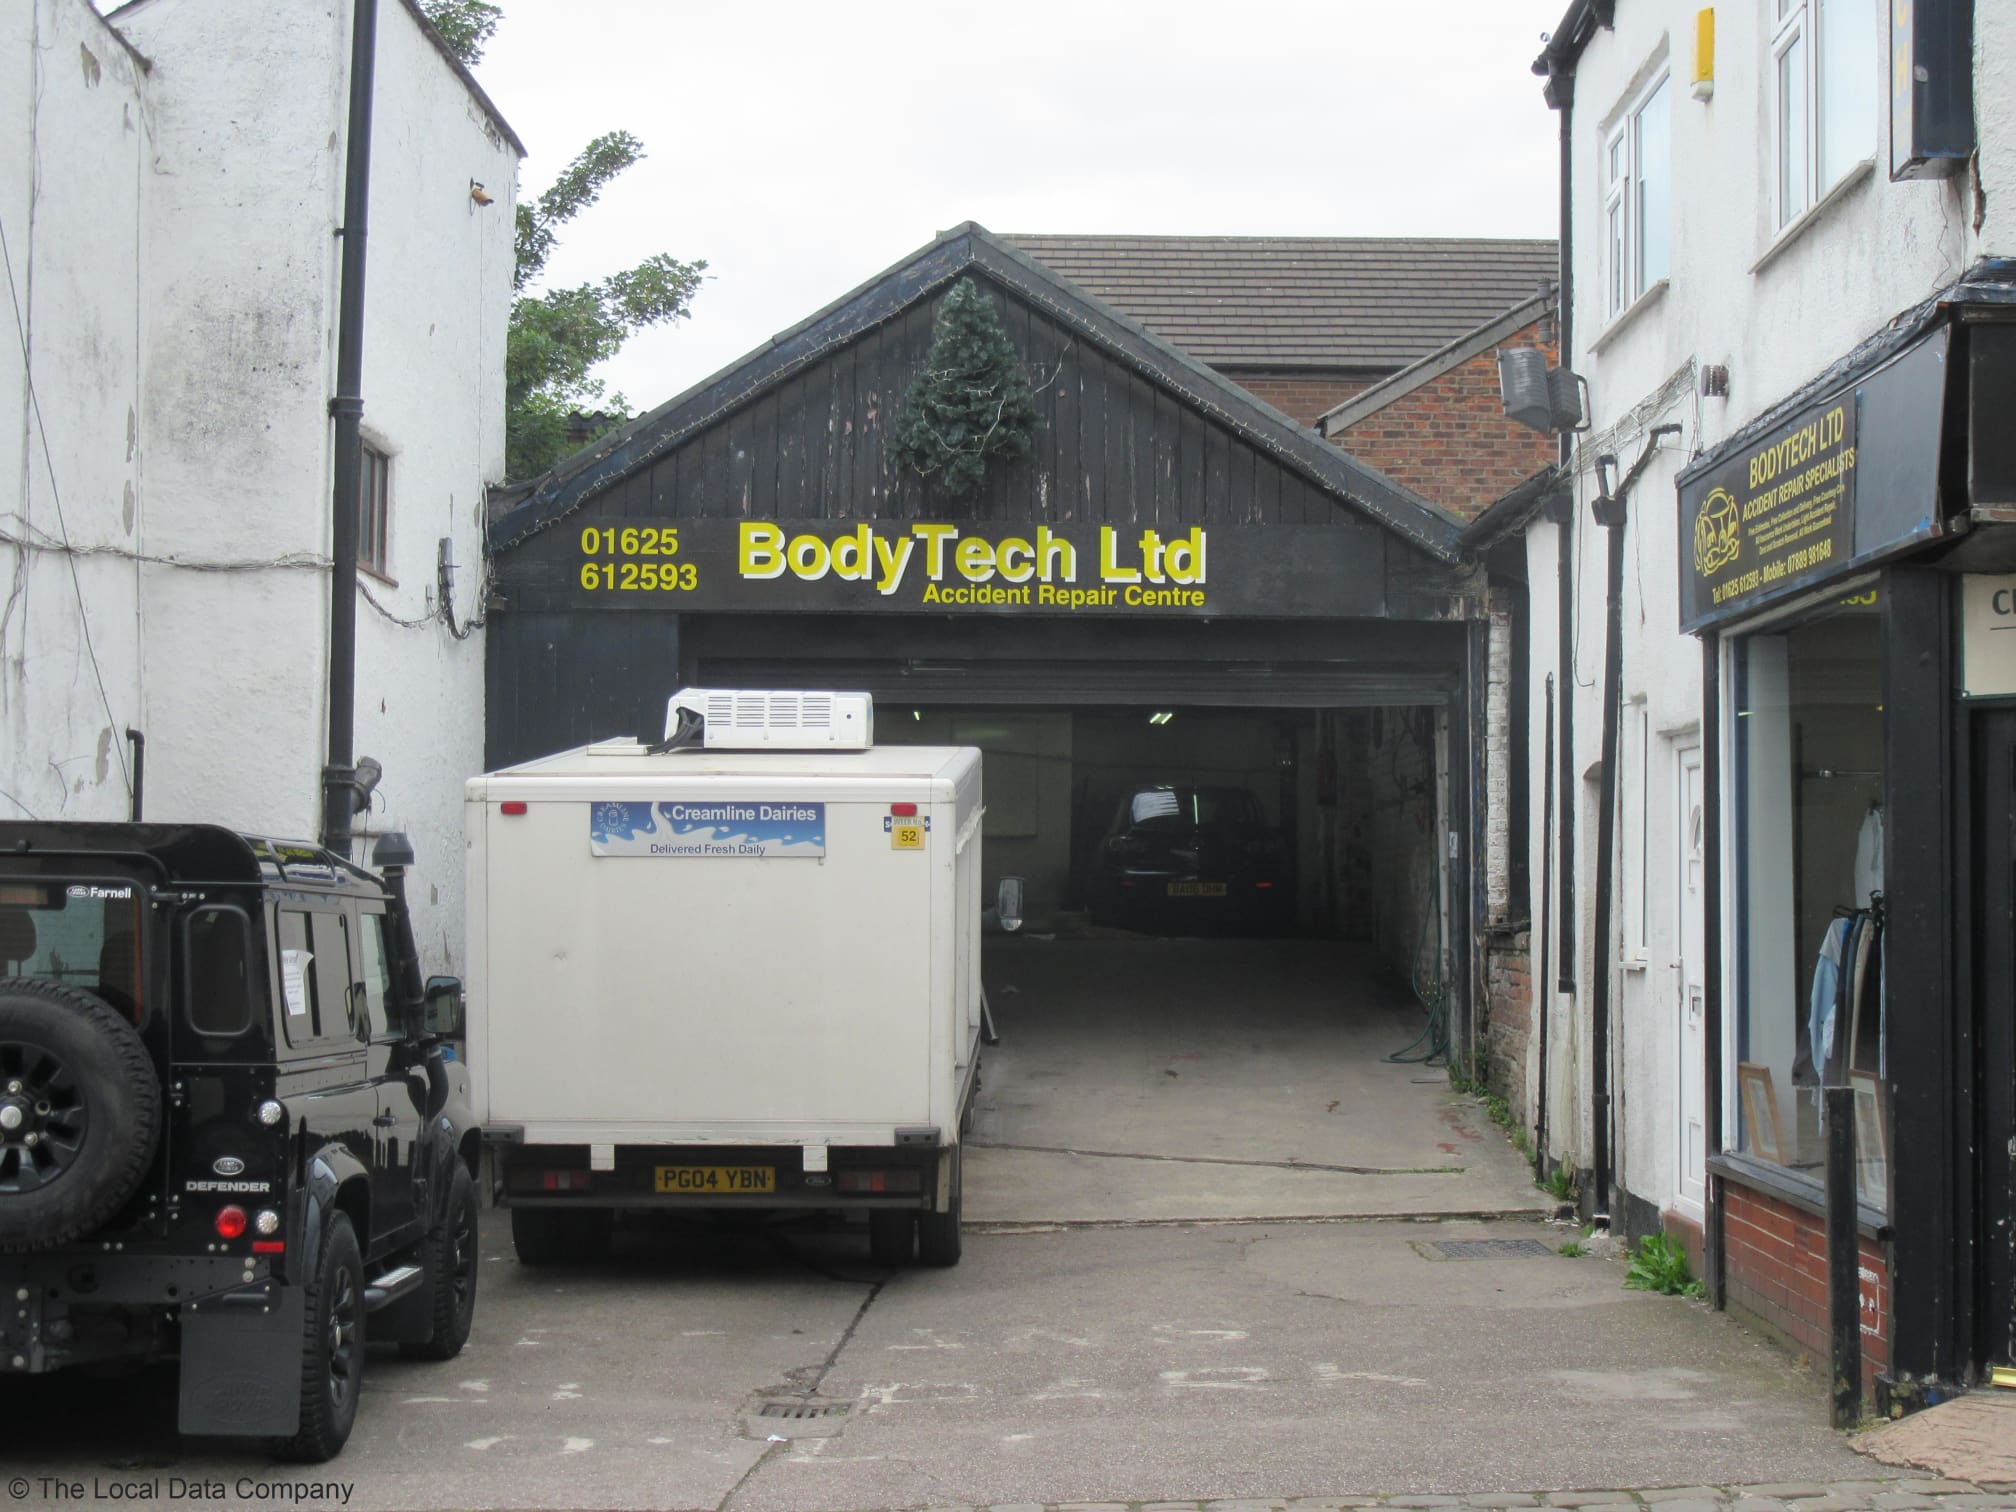 Bodytech Ltd Macclesfield 01625 612593